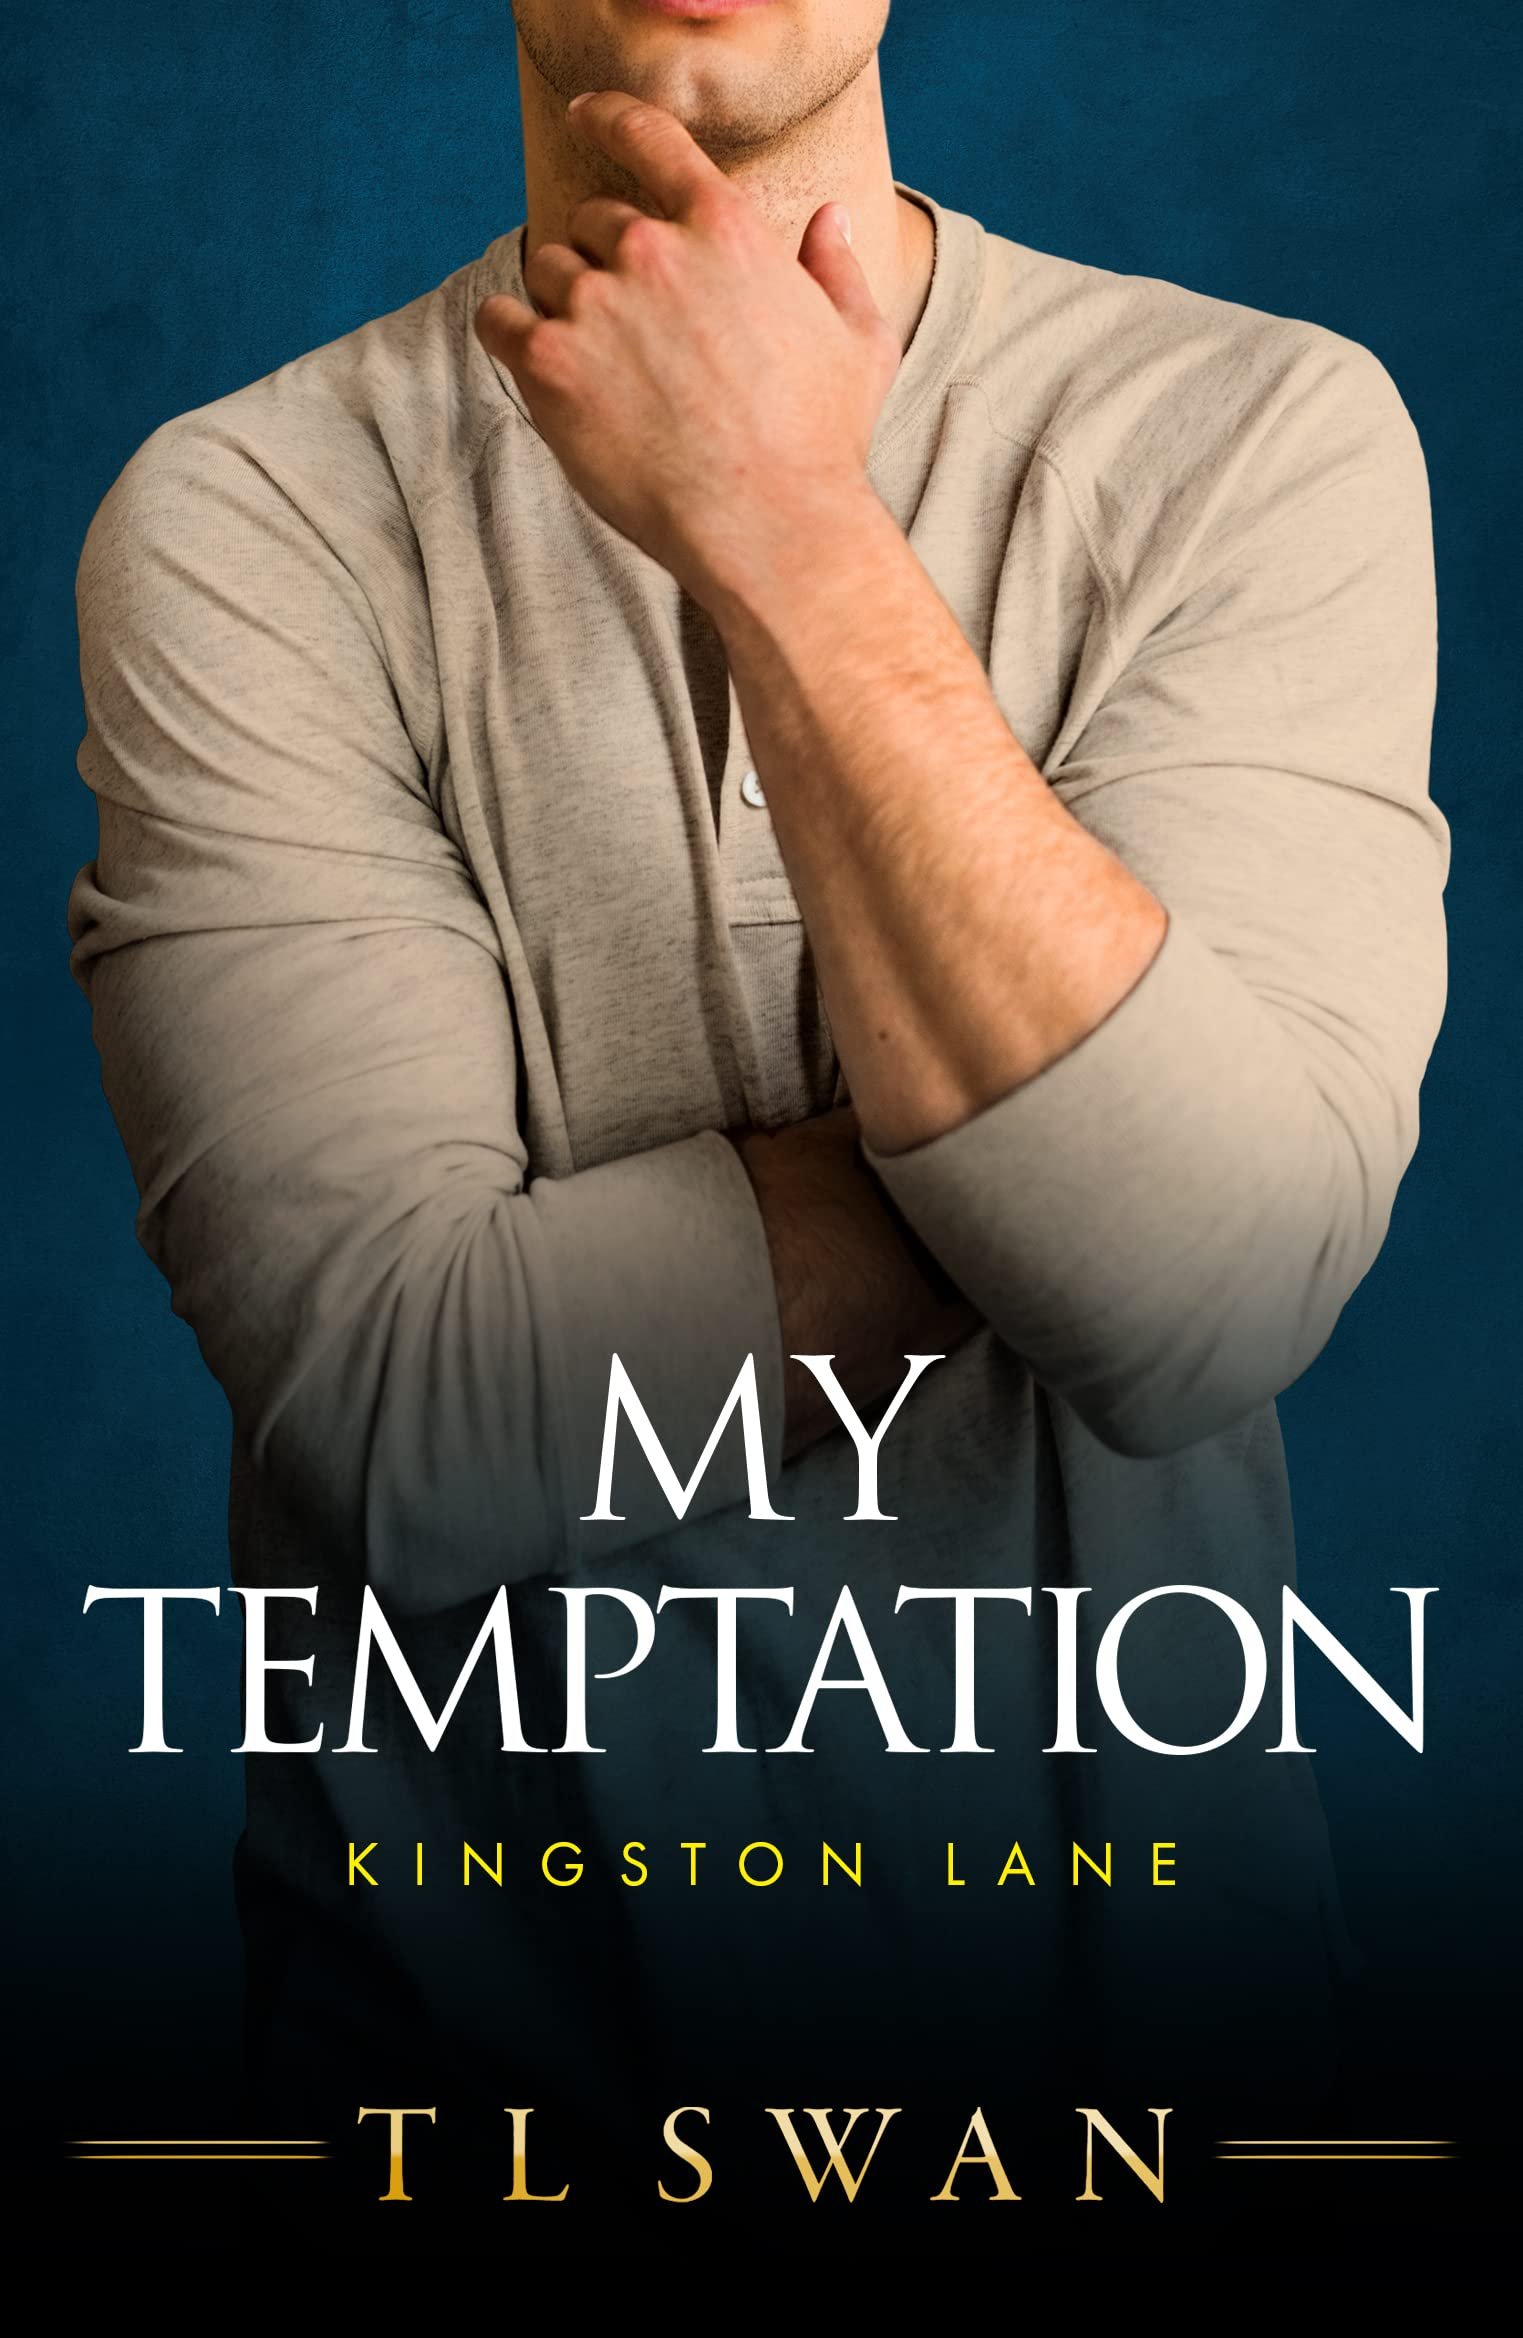 My Temptation (Kingston Lane Book 1) Cover